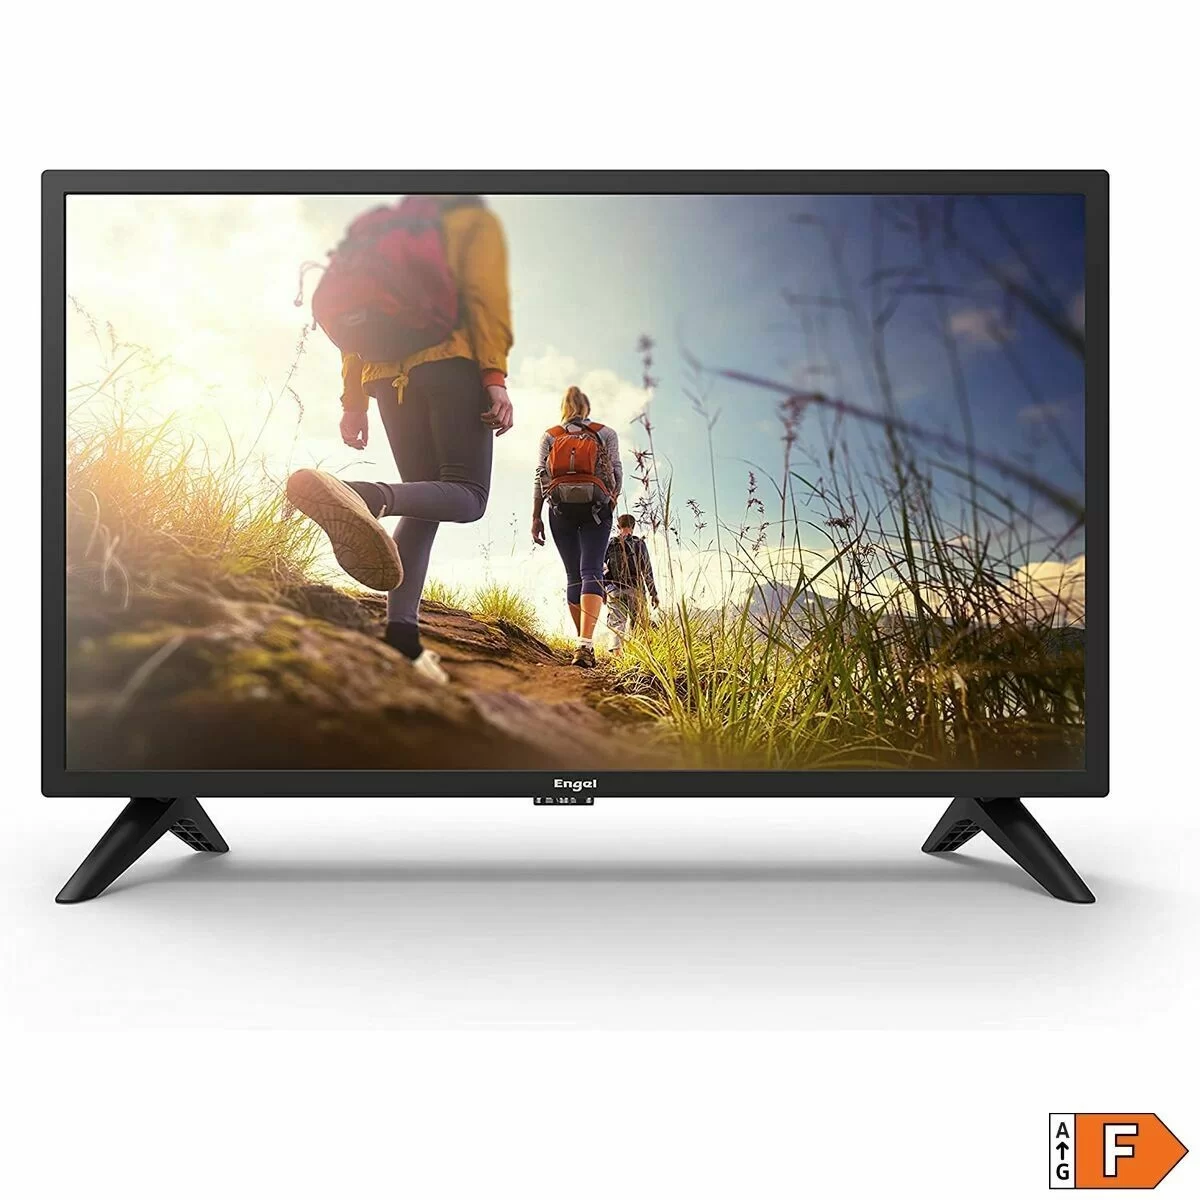 Smart TV Cecotec V2 series VQU20043 4K Ultra HD HDR10 QLED Dolby Vision